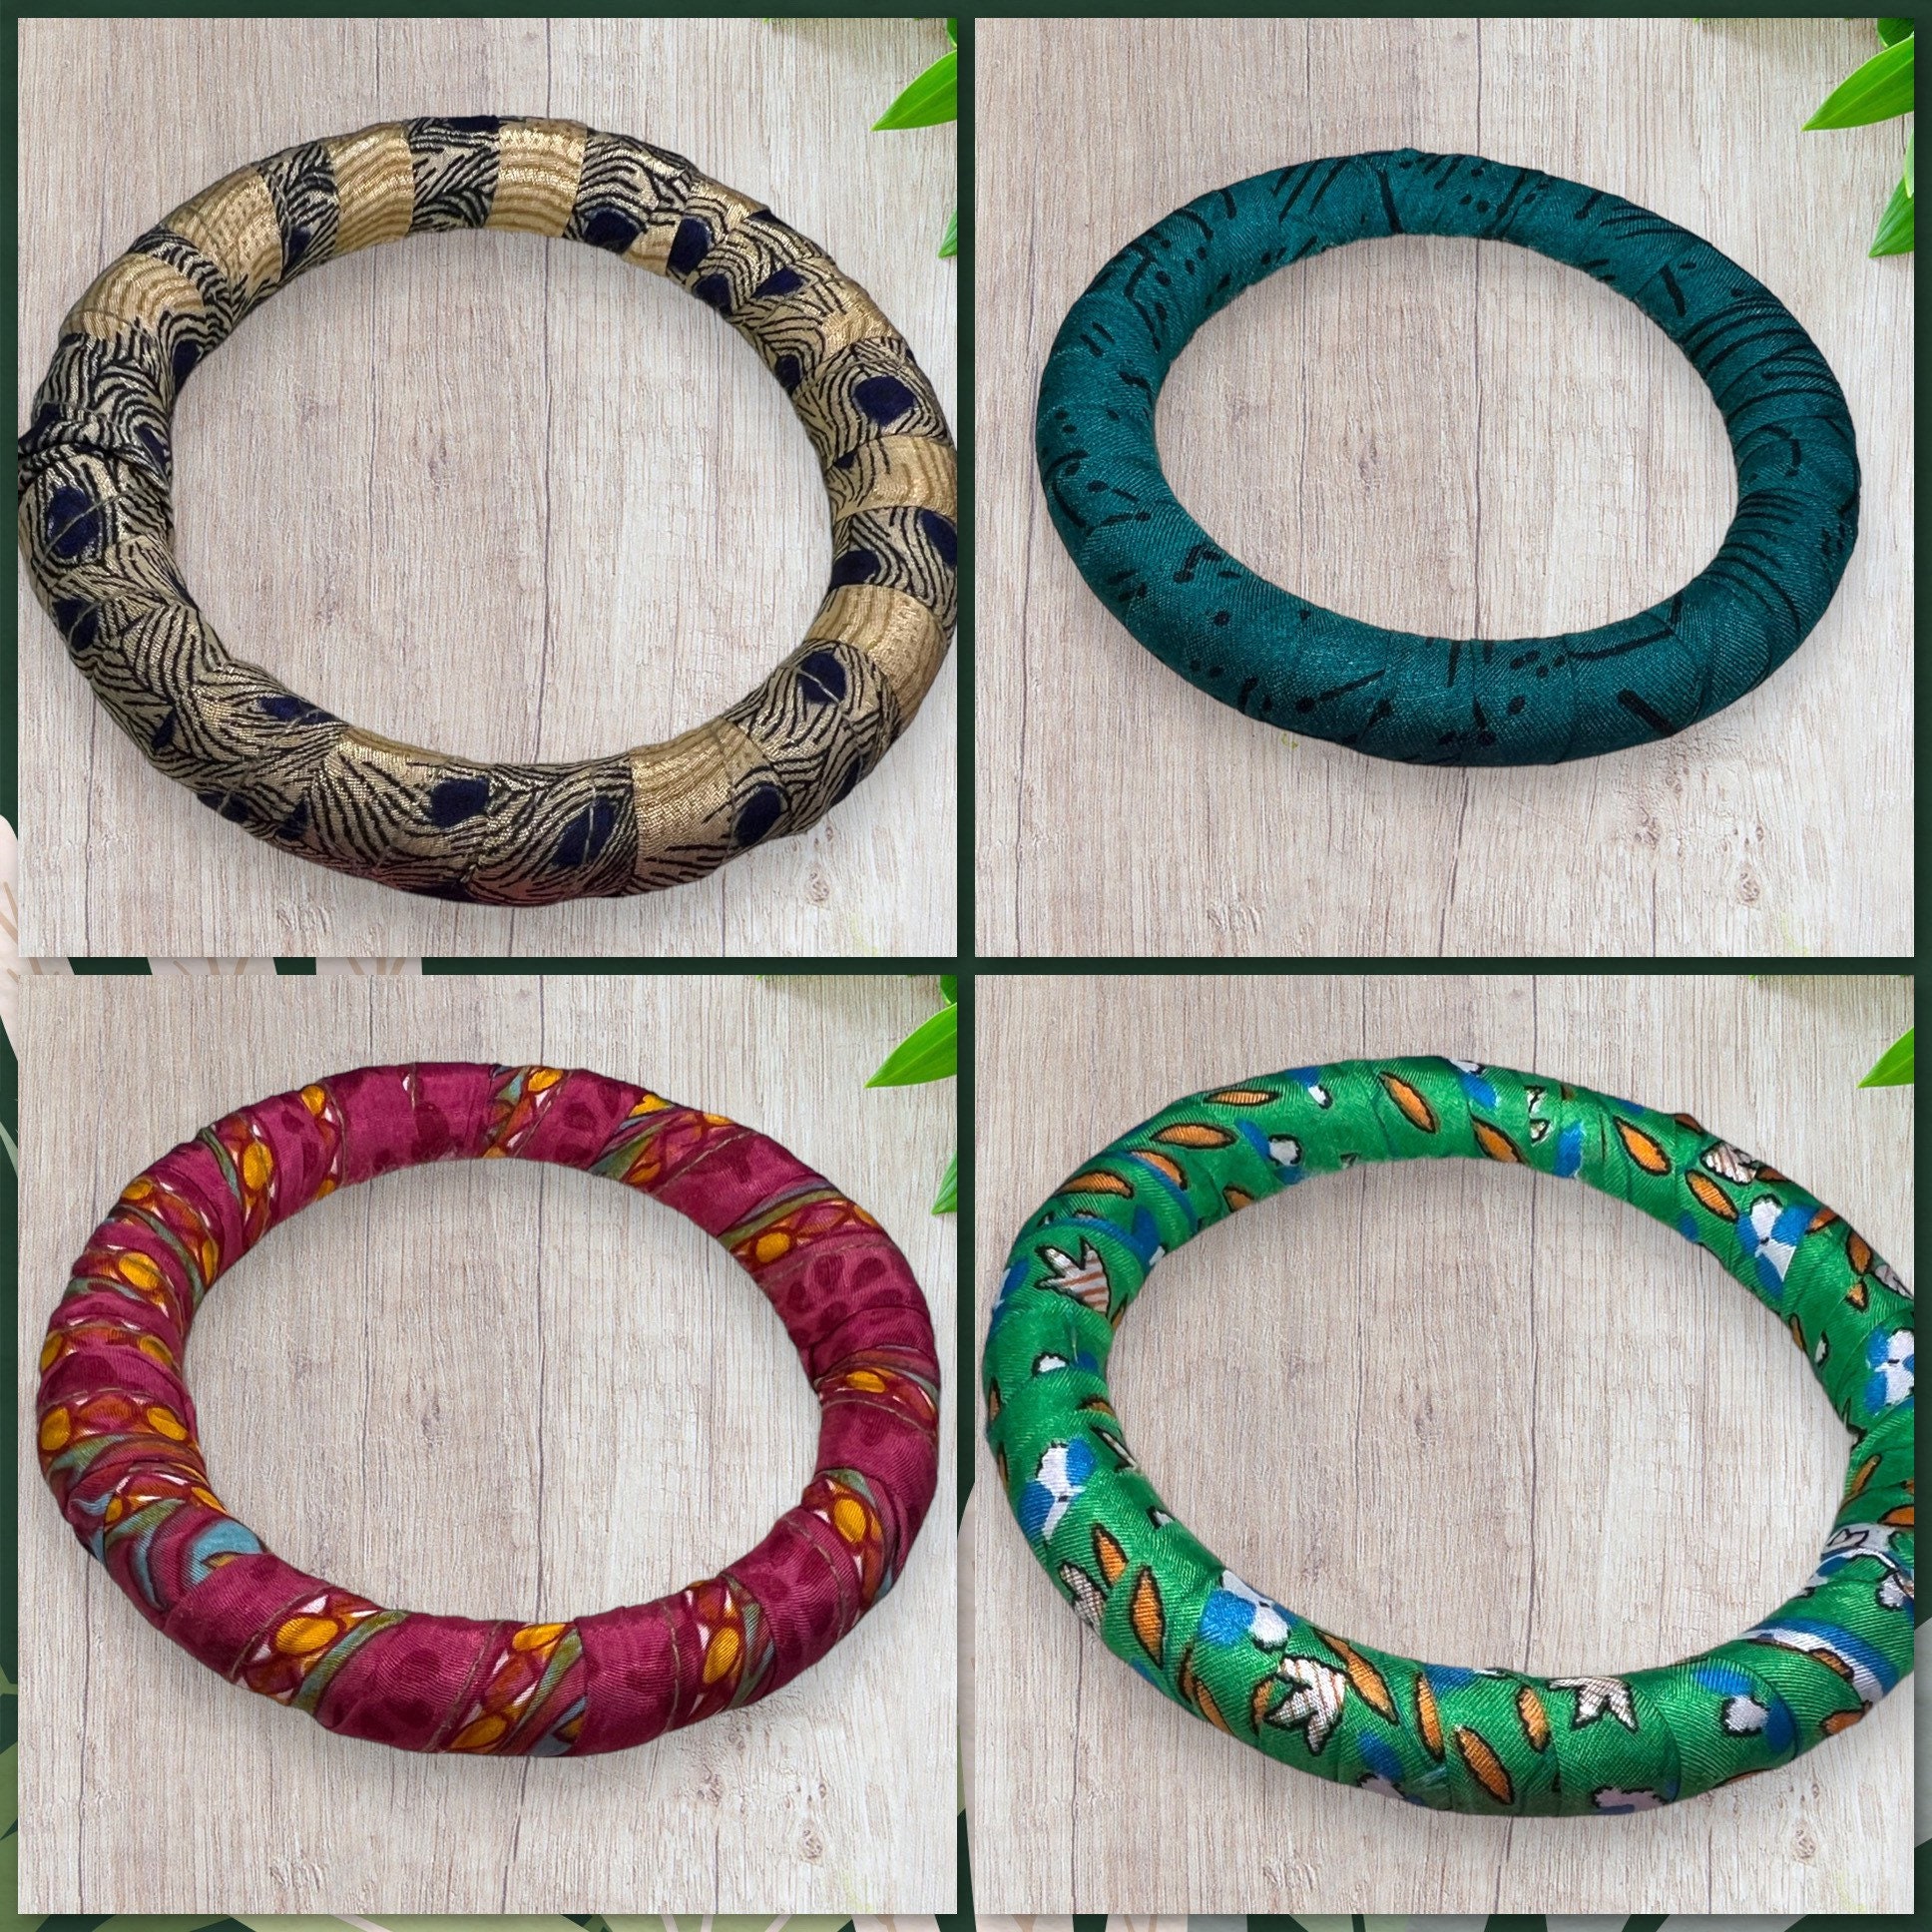 DIY Bangle Bracelet, DIY Bracelet Kits for Adults, Craft Kits for Teens,  Customize Wrap Fabric Bracelet, Jewellery Tutorial 